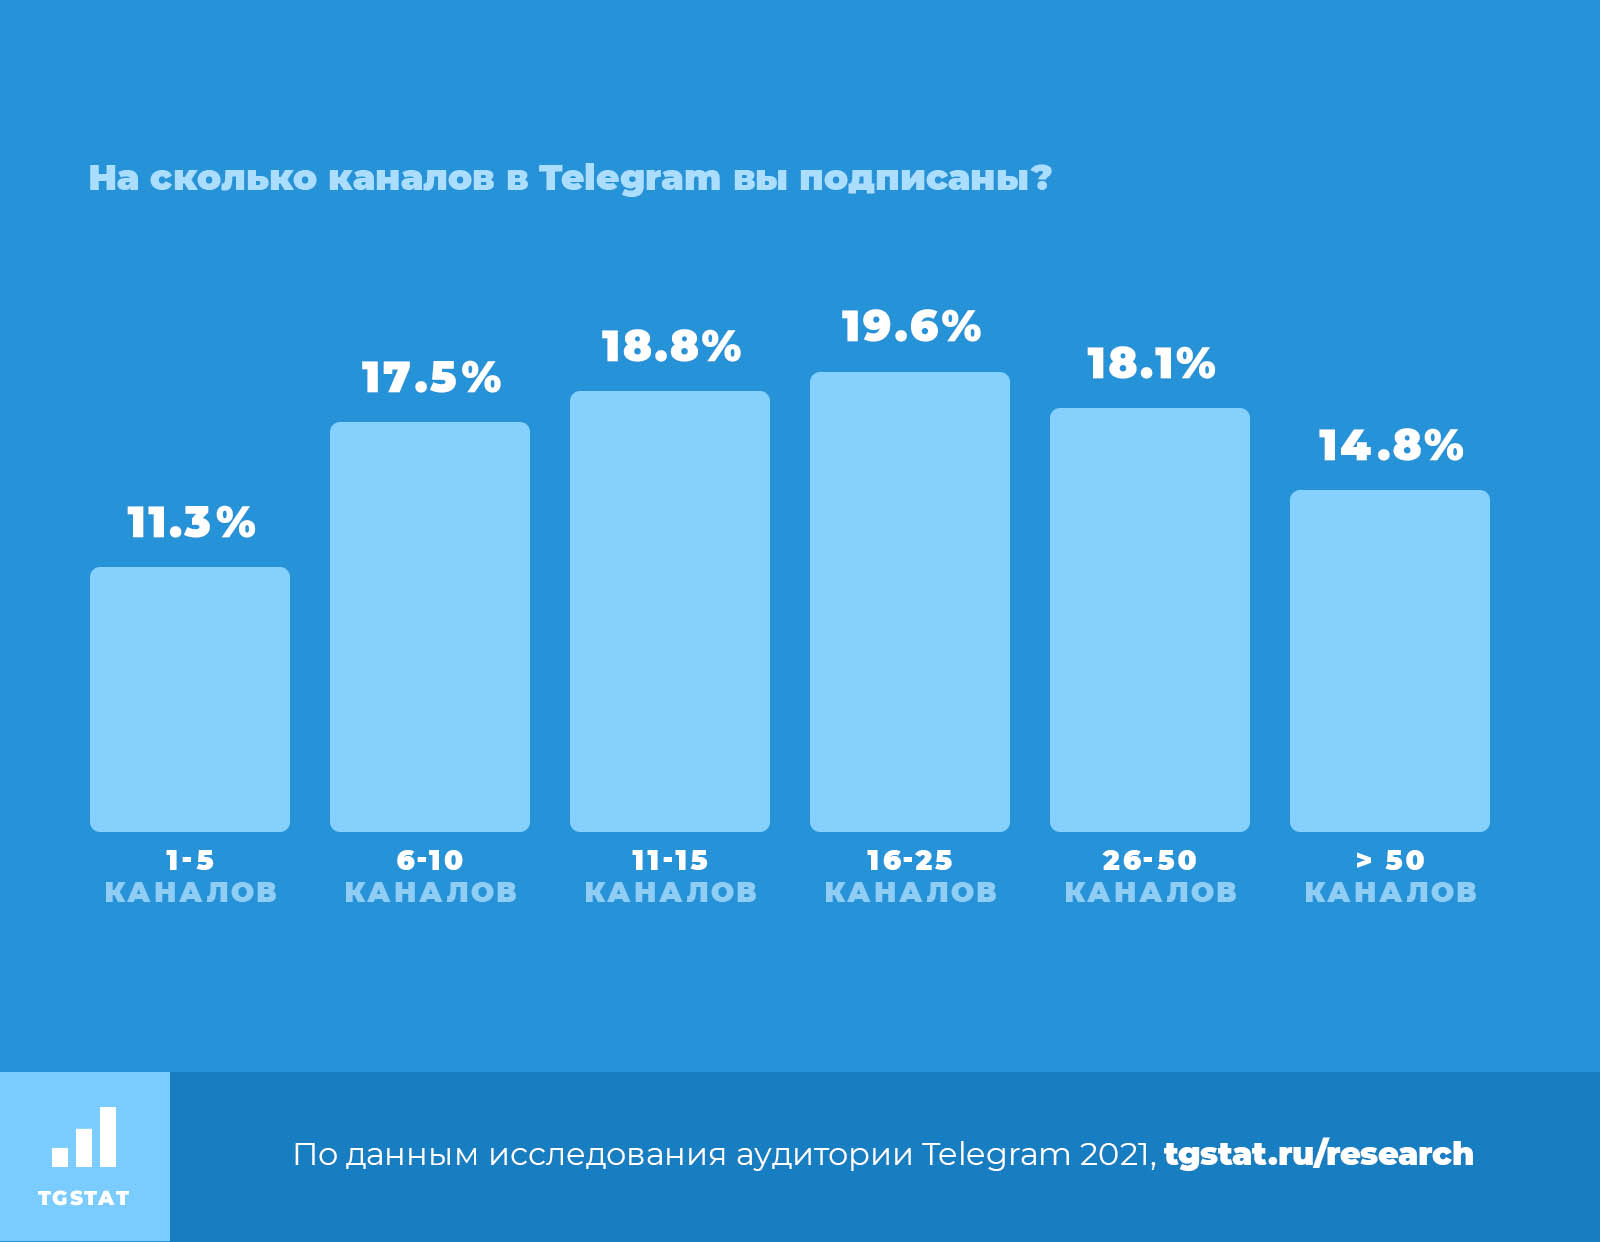 Статистика аудитории Telegram каналов